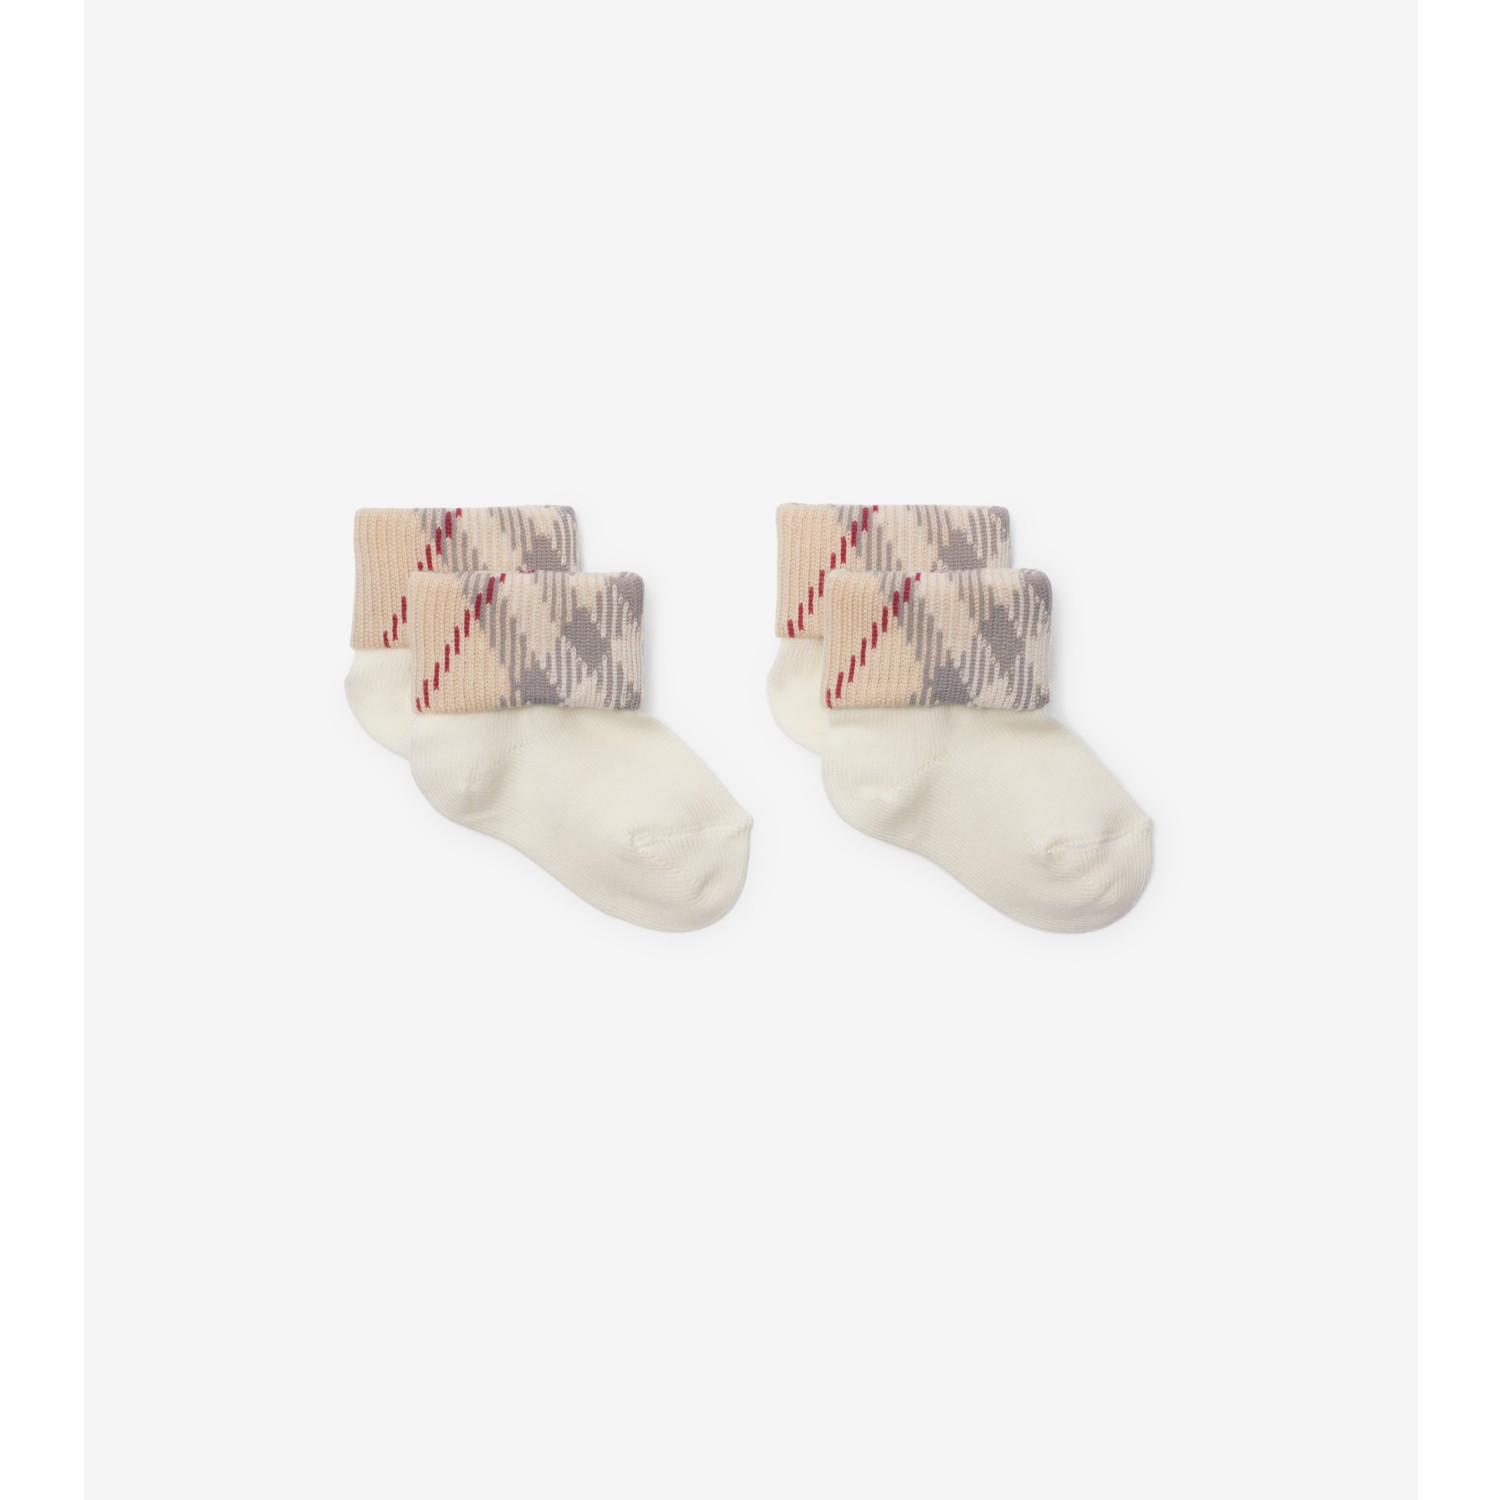 Two-piece Cotton Blend Socks Set